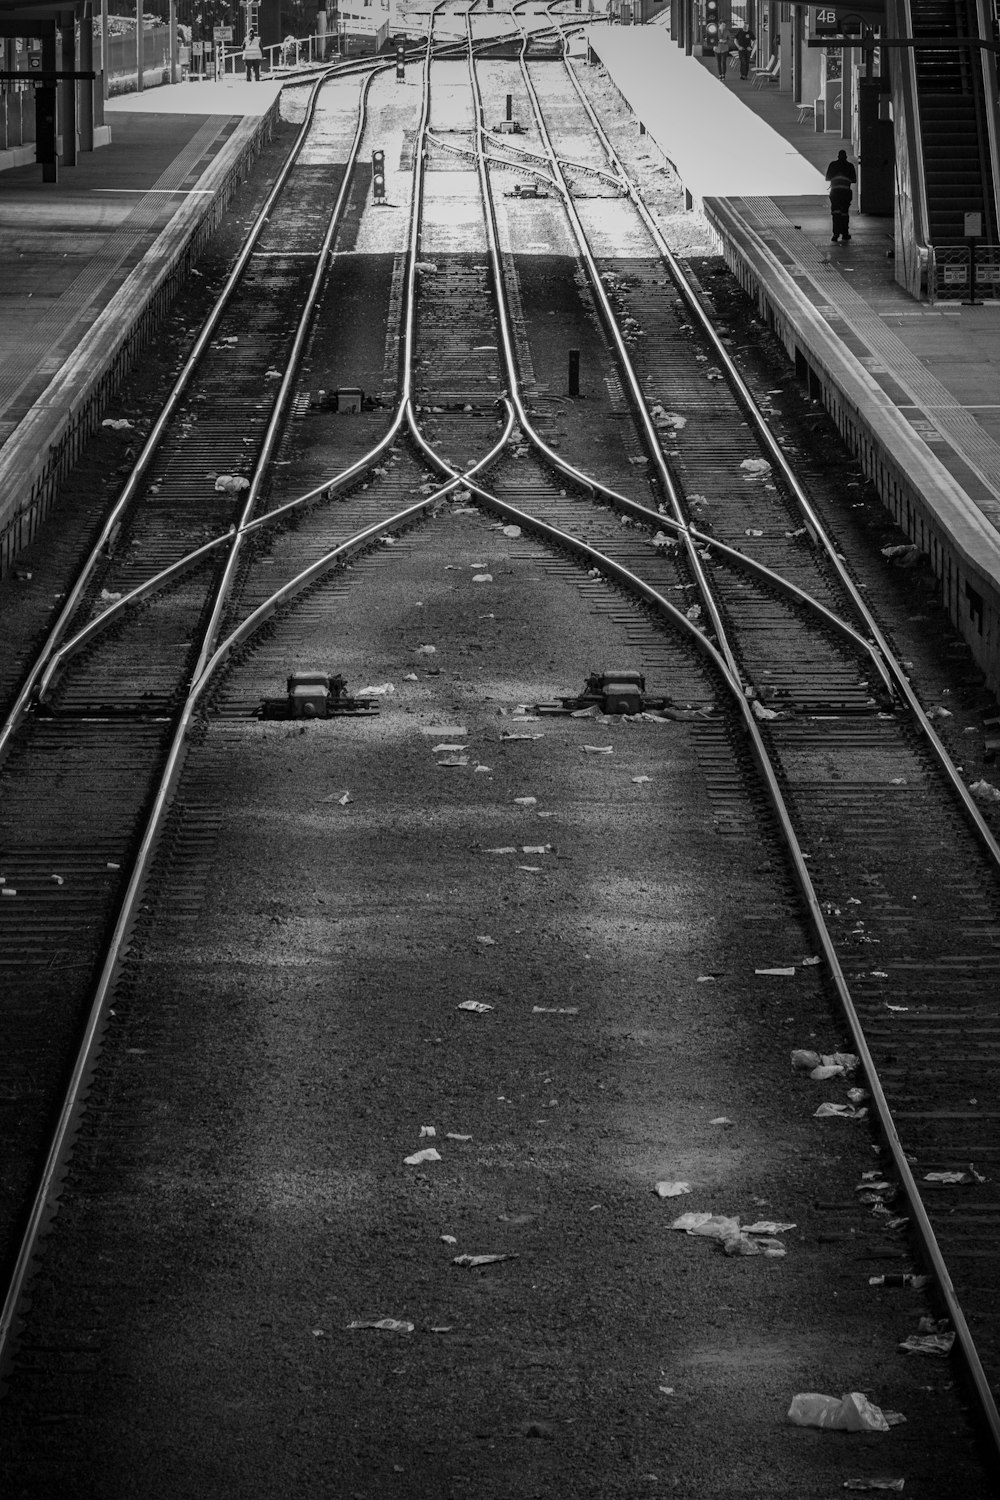 Fotografía en escala de grises de un ferrocarril vacío